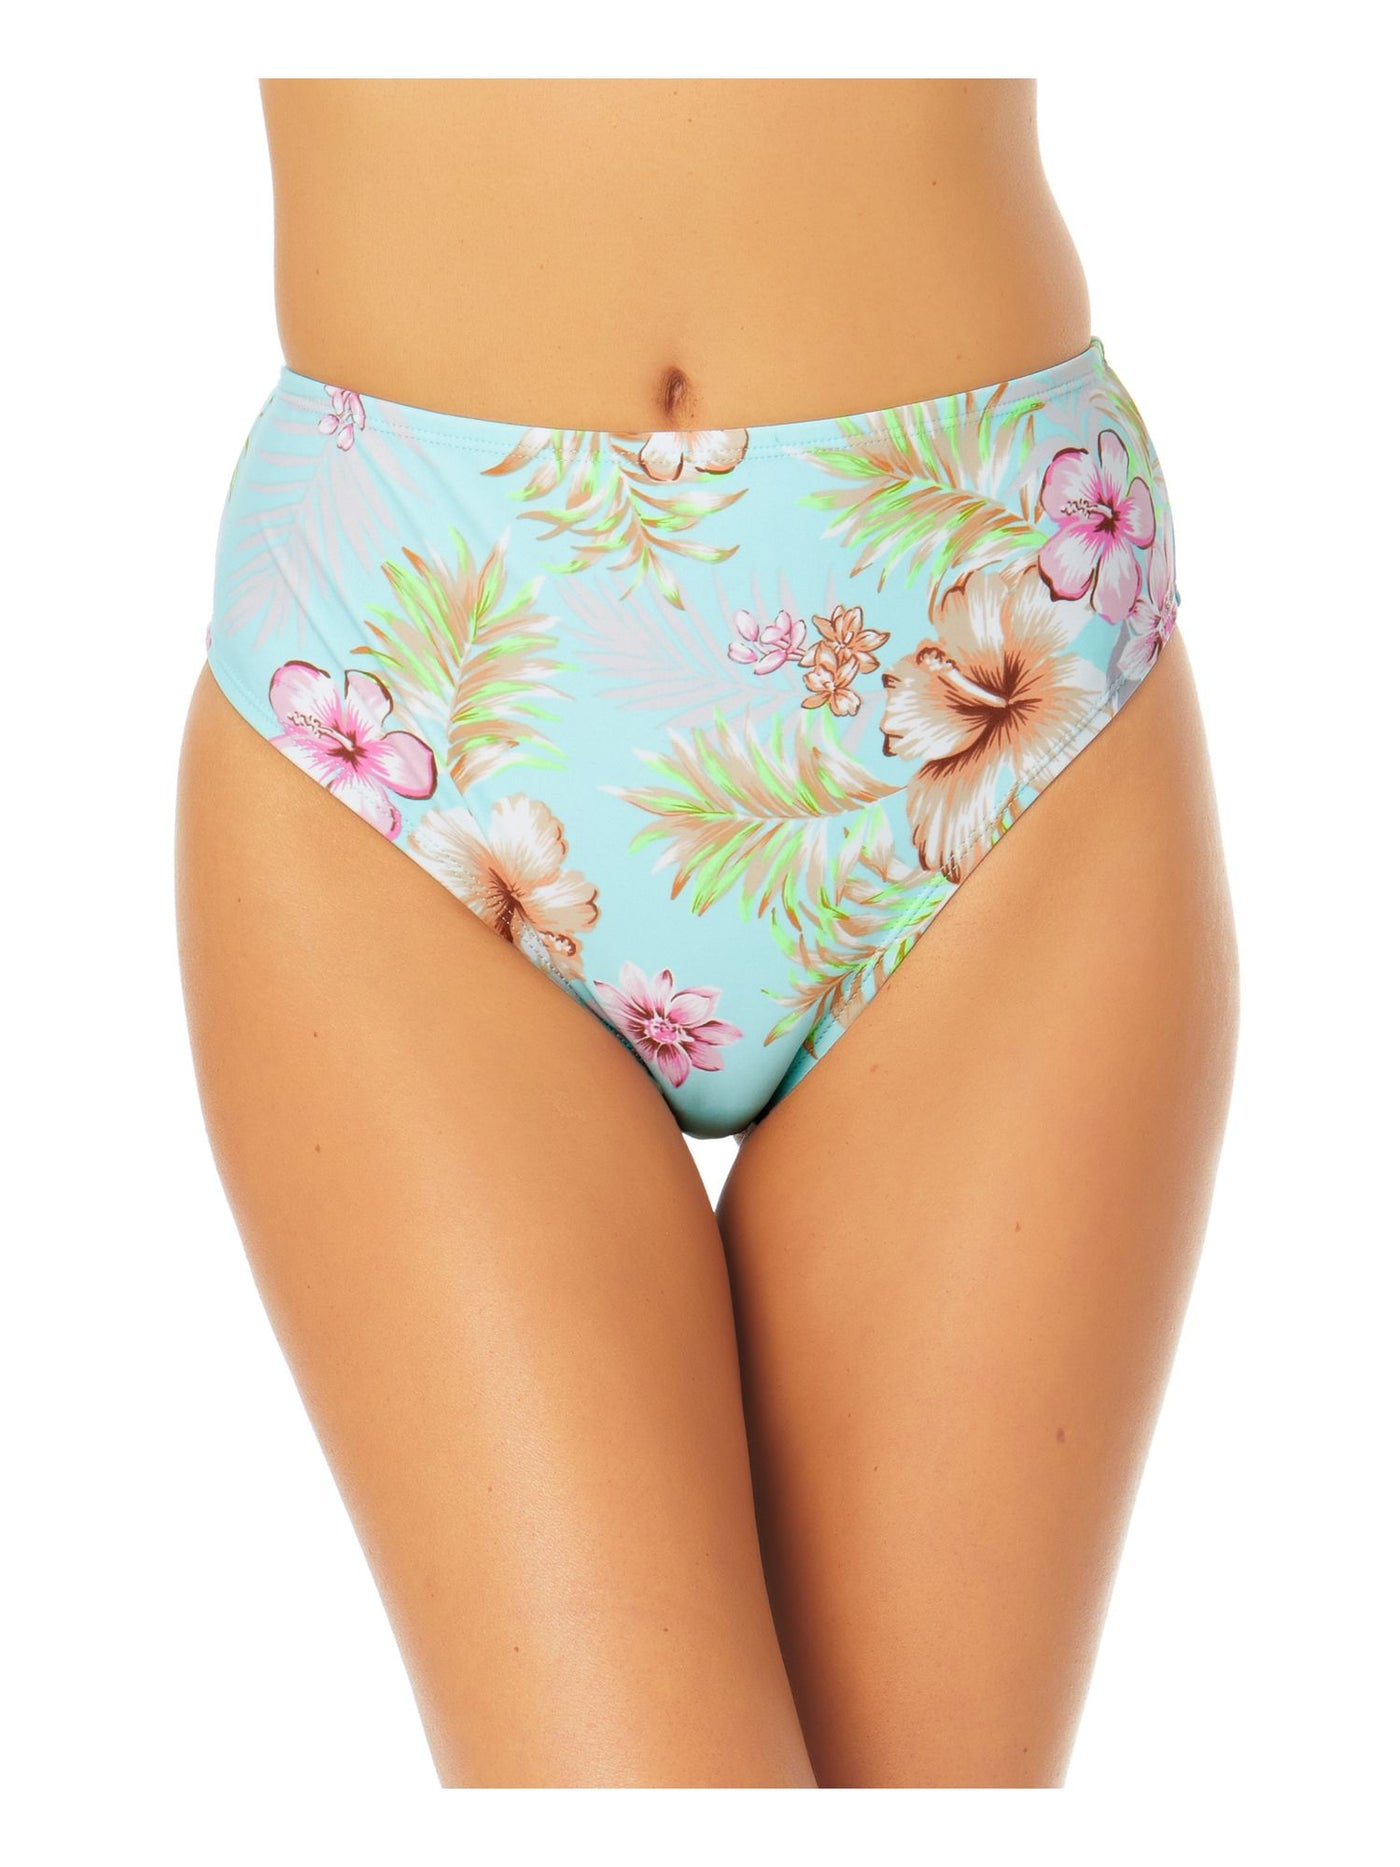 CALIFORNIA SUNSHINE Women's Aqua Tropical Print Stretch Mid-Rise Lined Bikini Moderate Coverage High Leg Swimsuit Bottom XL